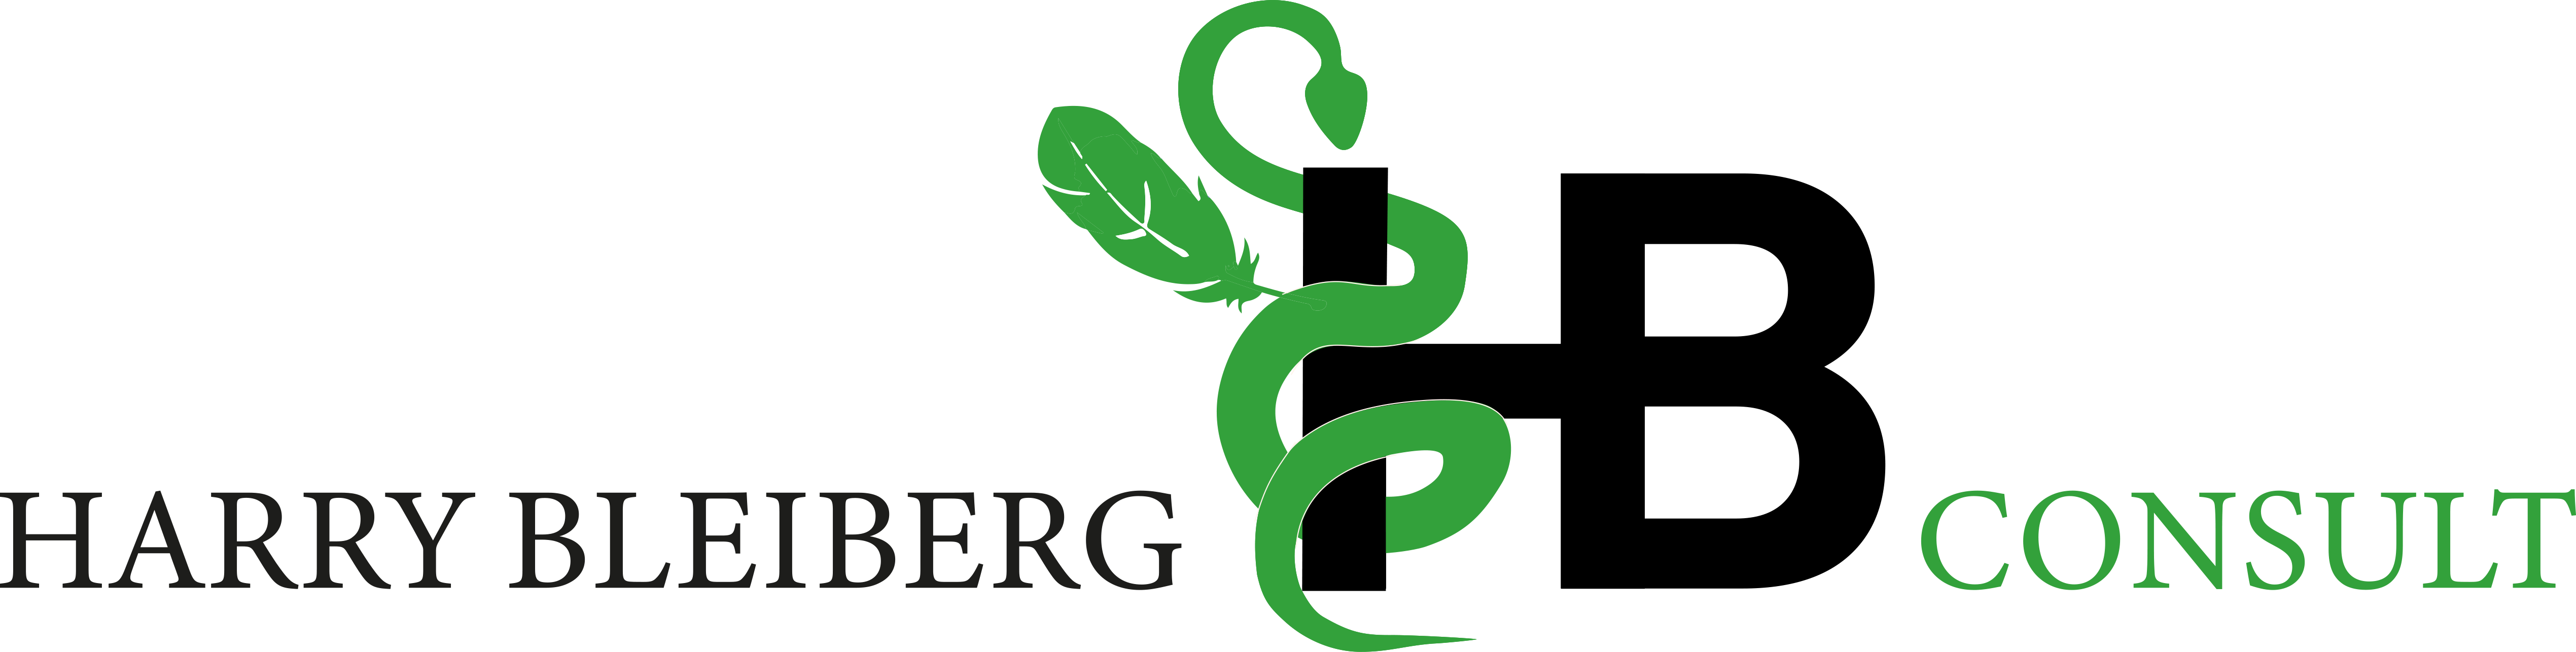 Harry Bleiberg Consult (HBC) logo